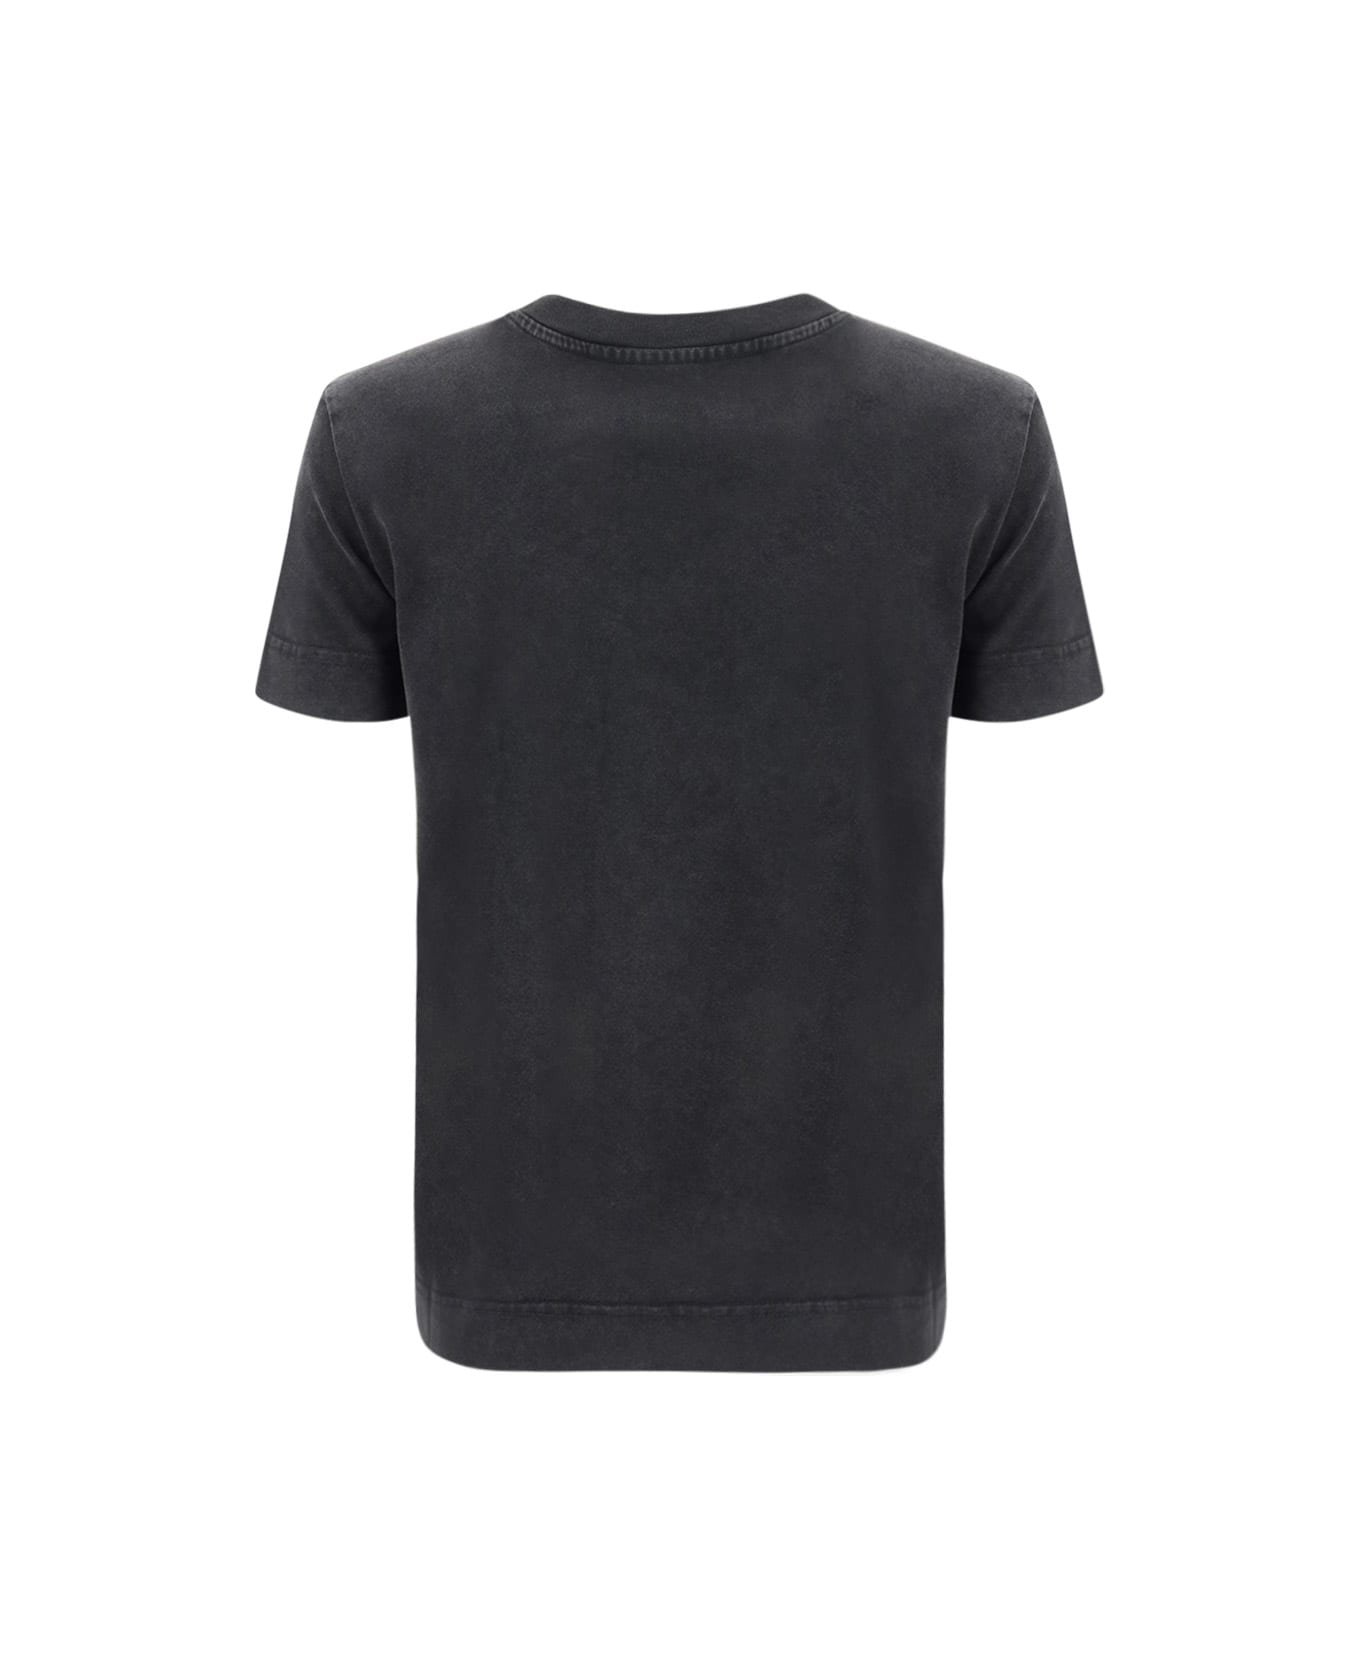 Givenchy T-shirt - Faded Black